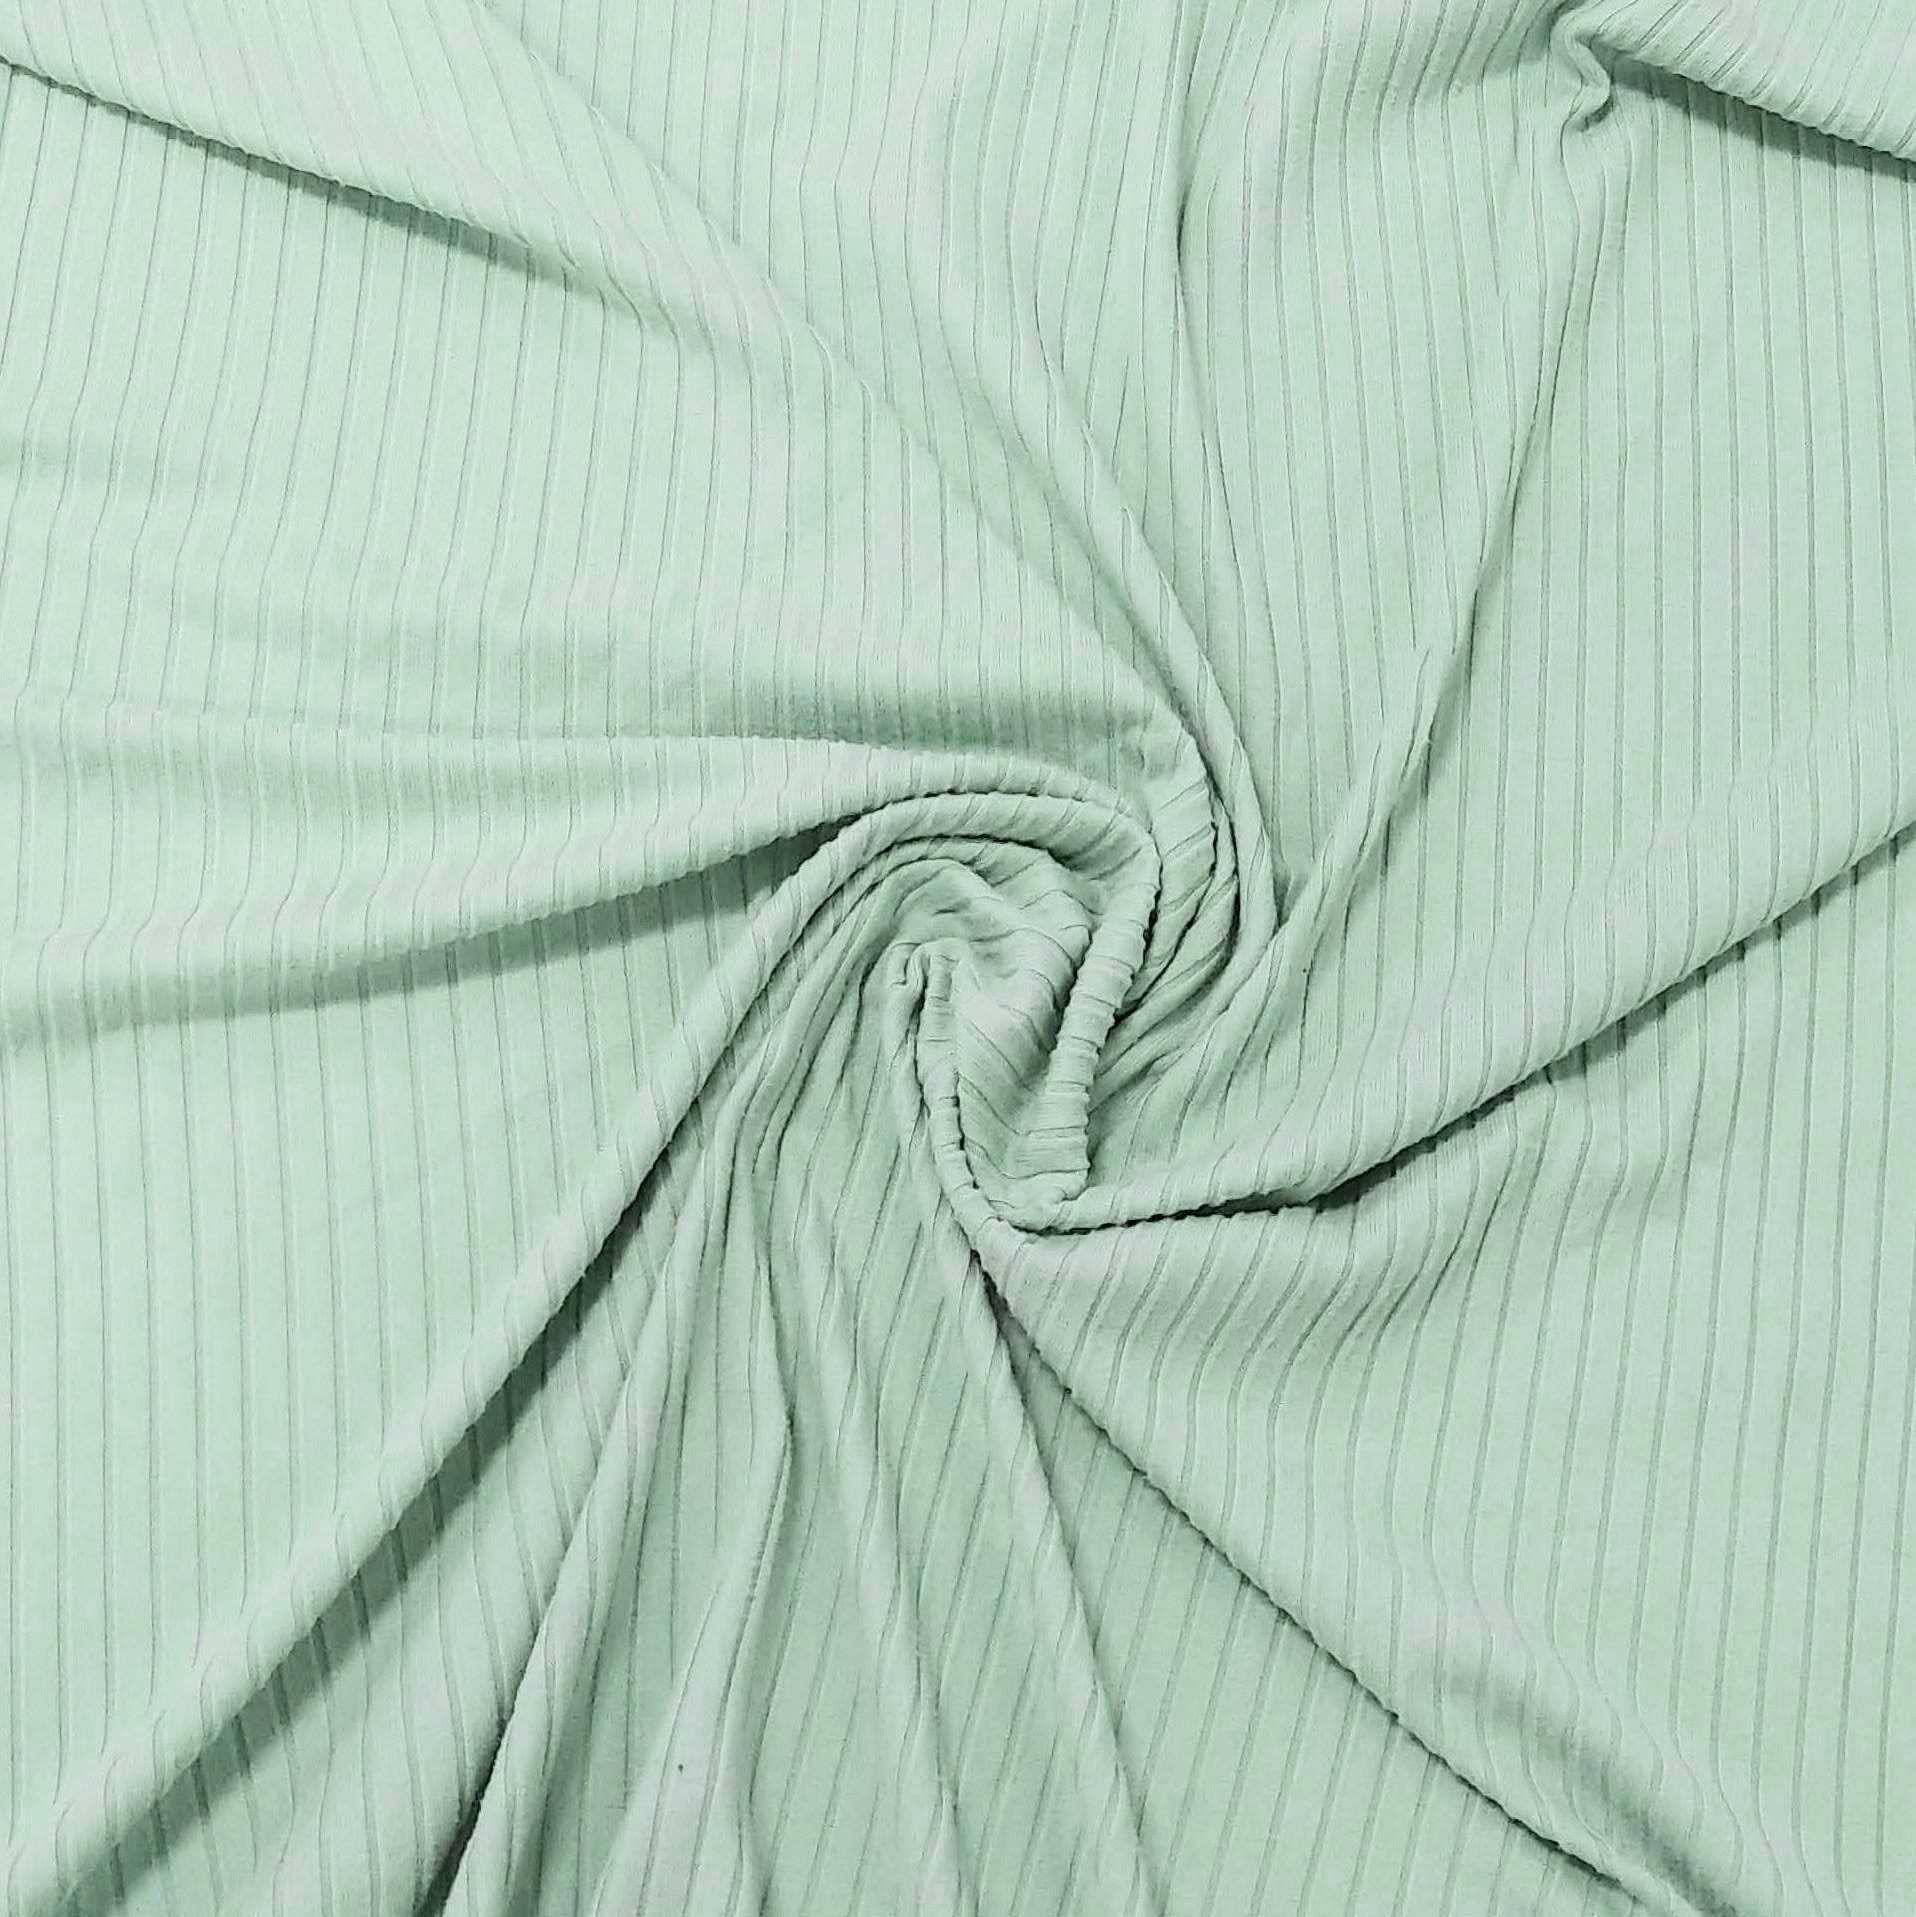 Sage Green 4-Way Stretch Spandex Fabric by The Yard 